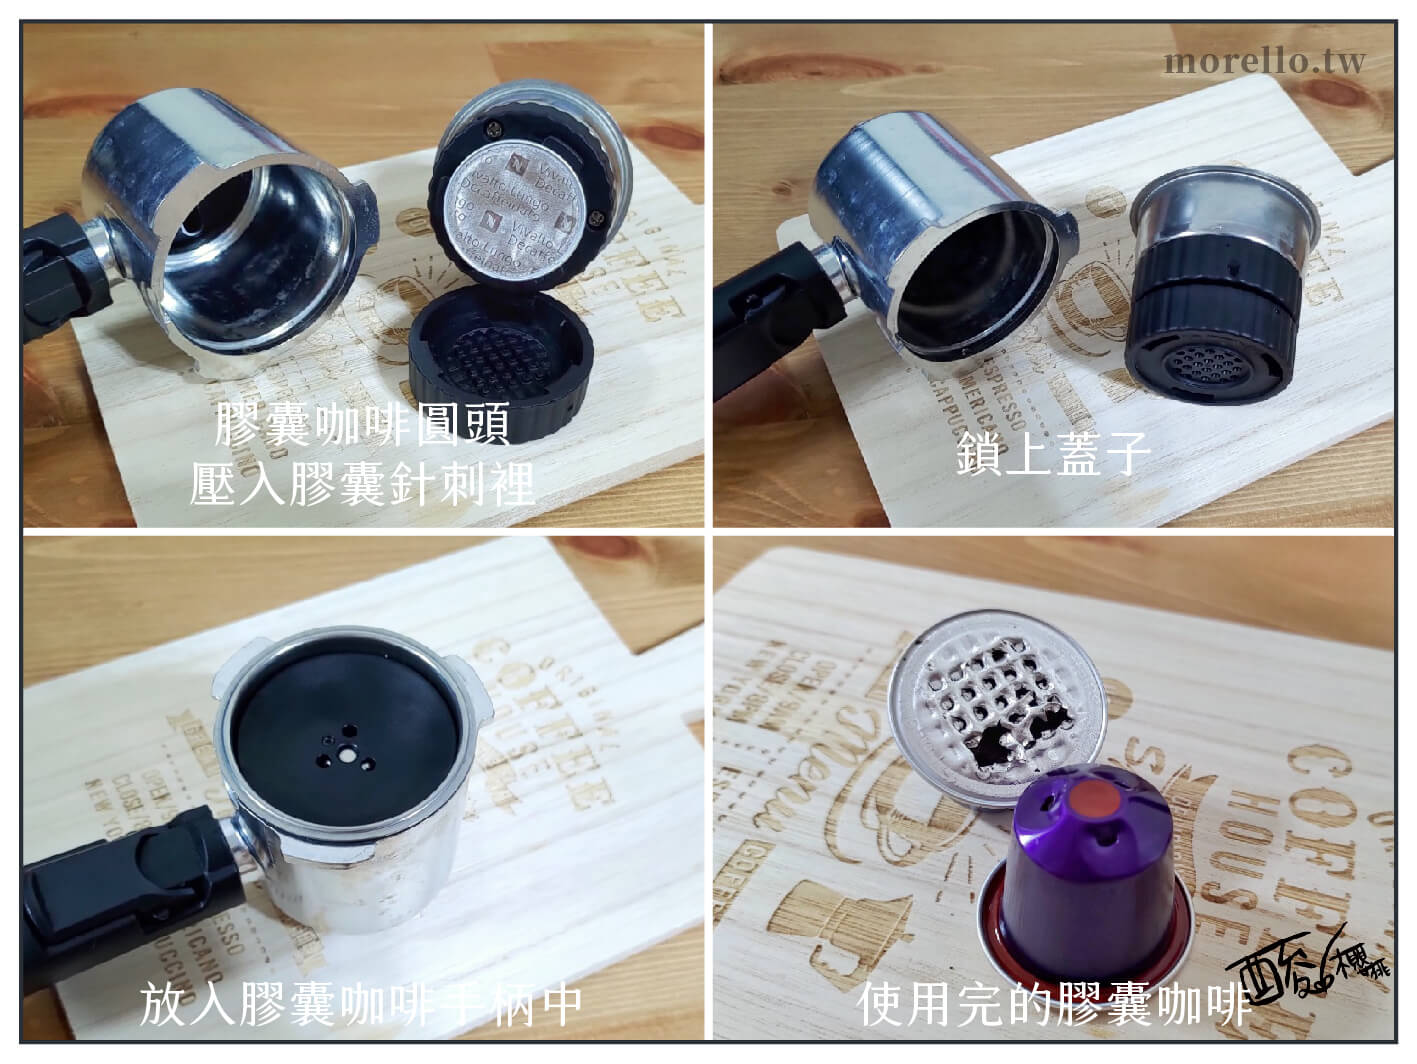 YIRGA CLASSIC 半自動義式咖啡機 膠囊咖啡手柄操作